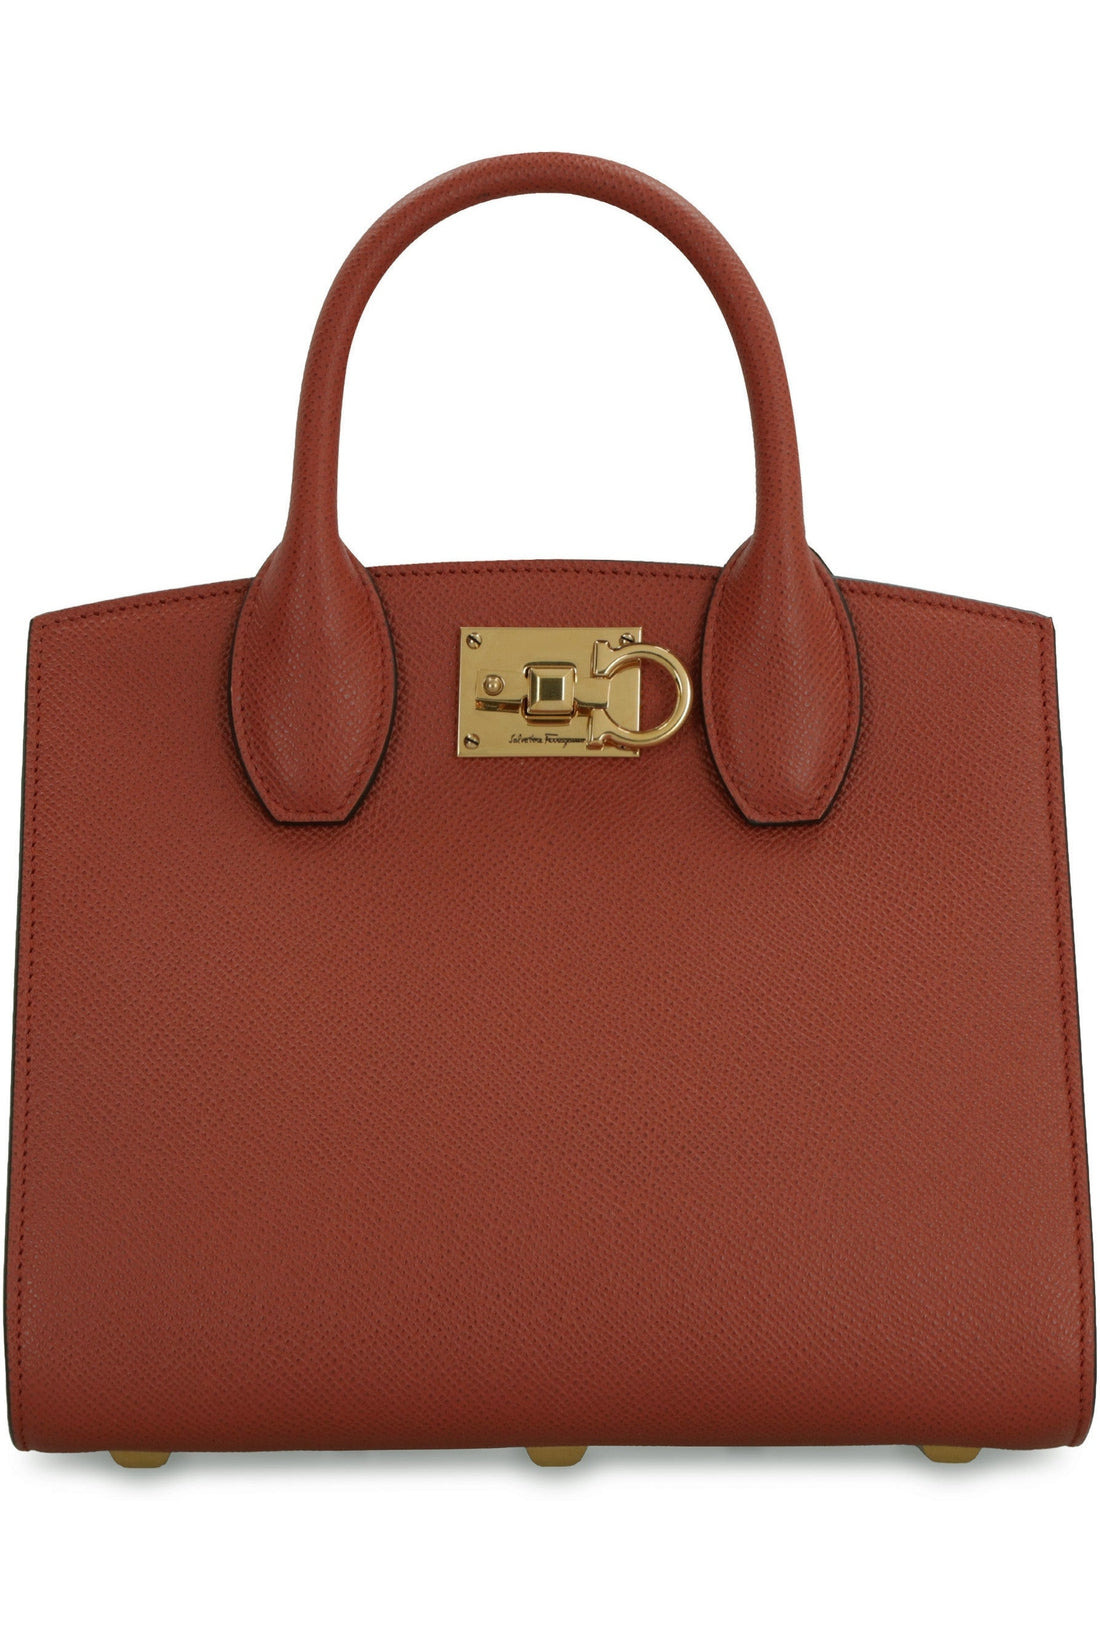 FERRAGAMO-OUTLET-SALE-Studio Box leather handbag-ARCHIVIST